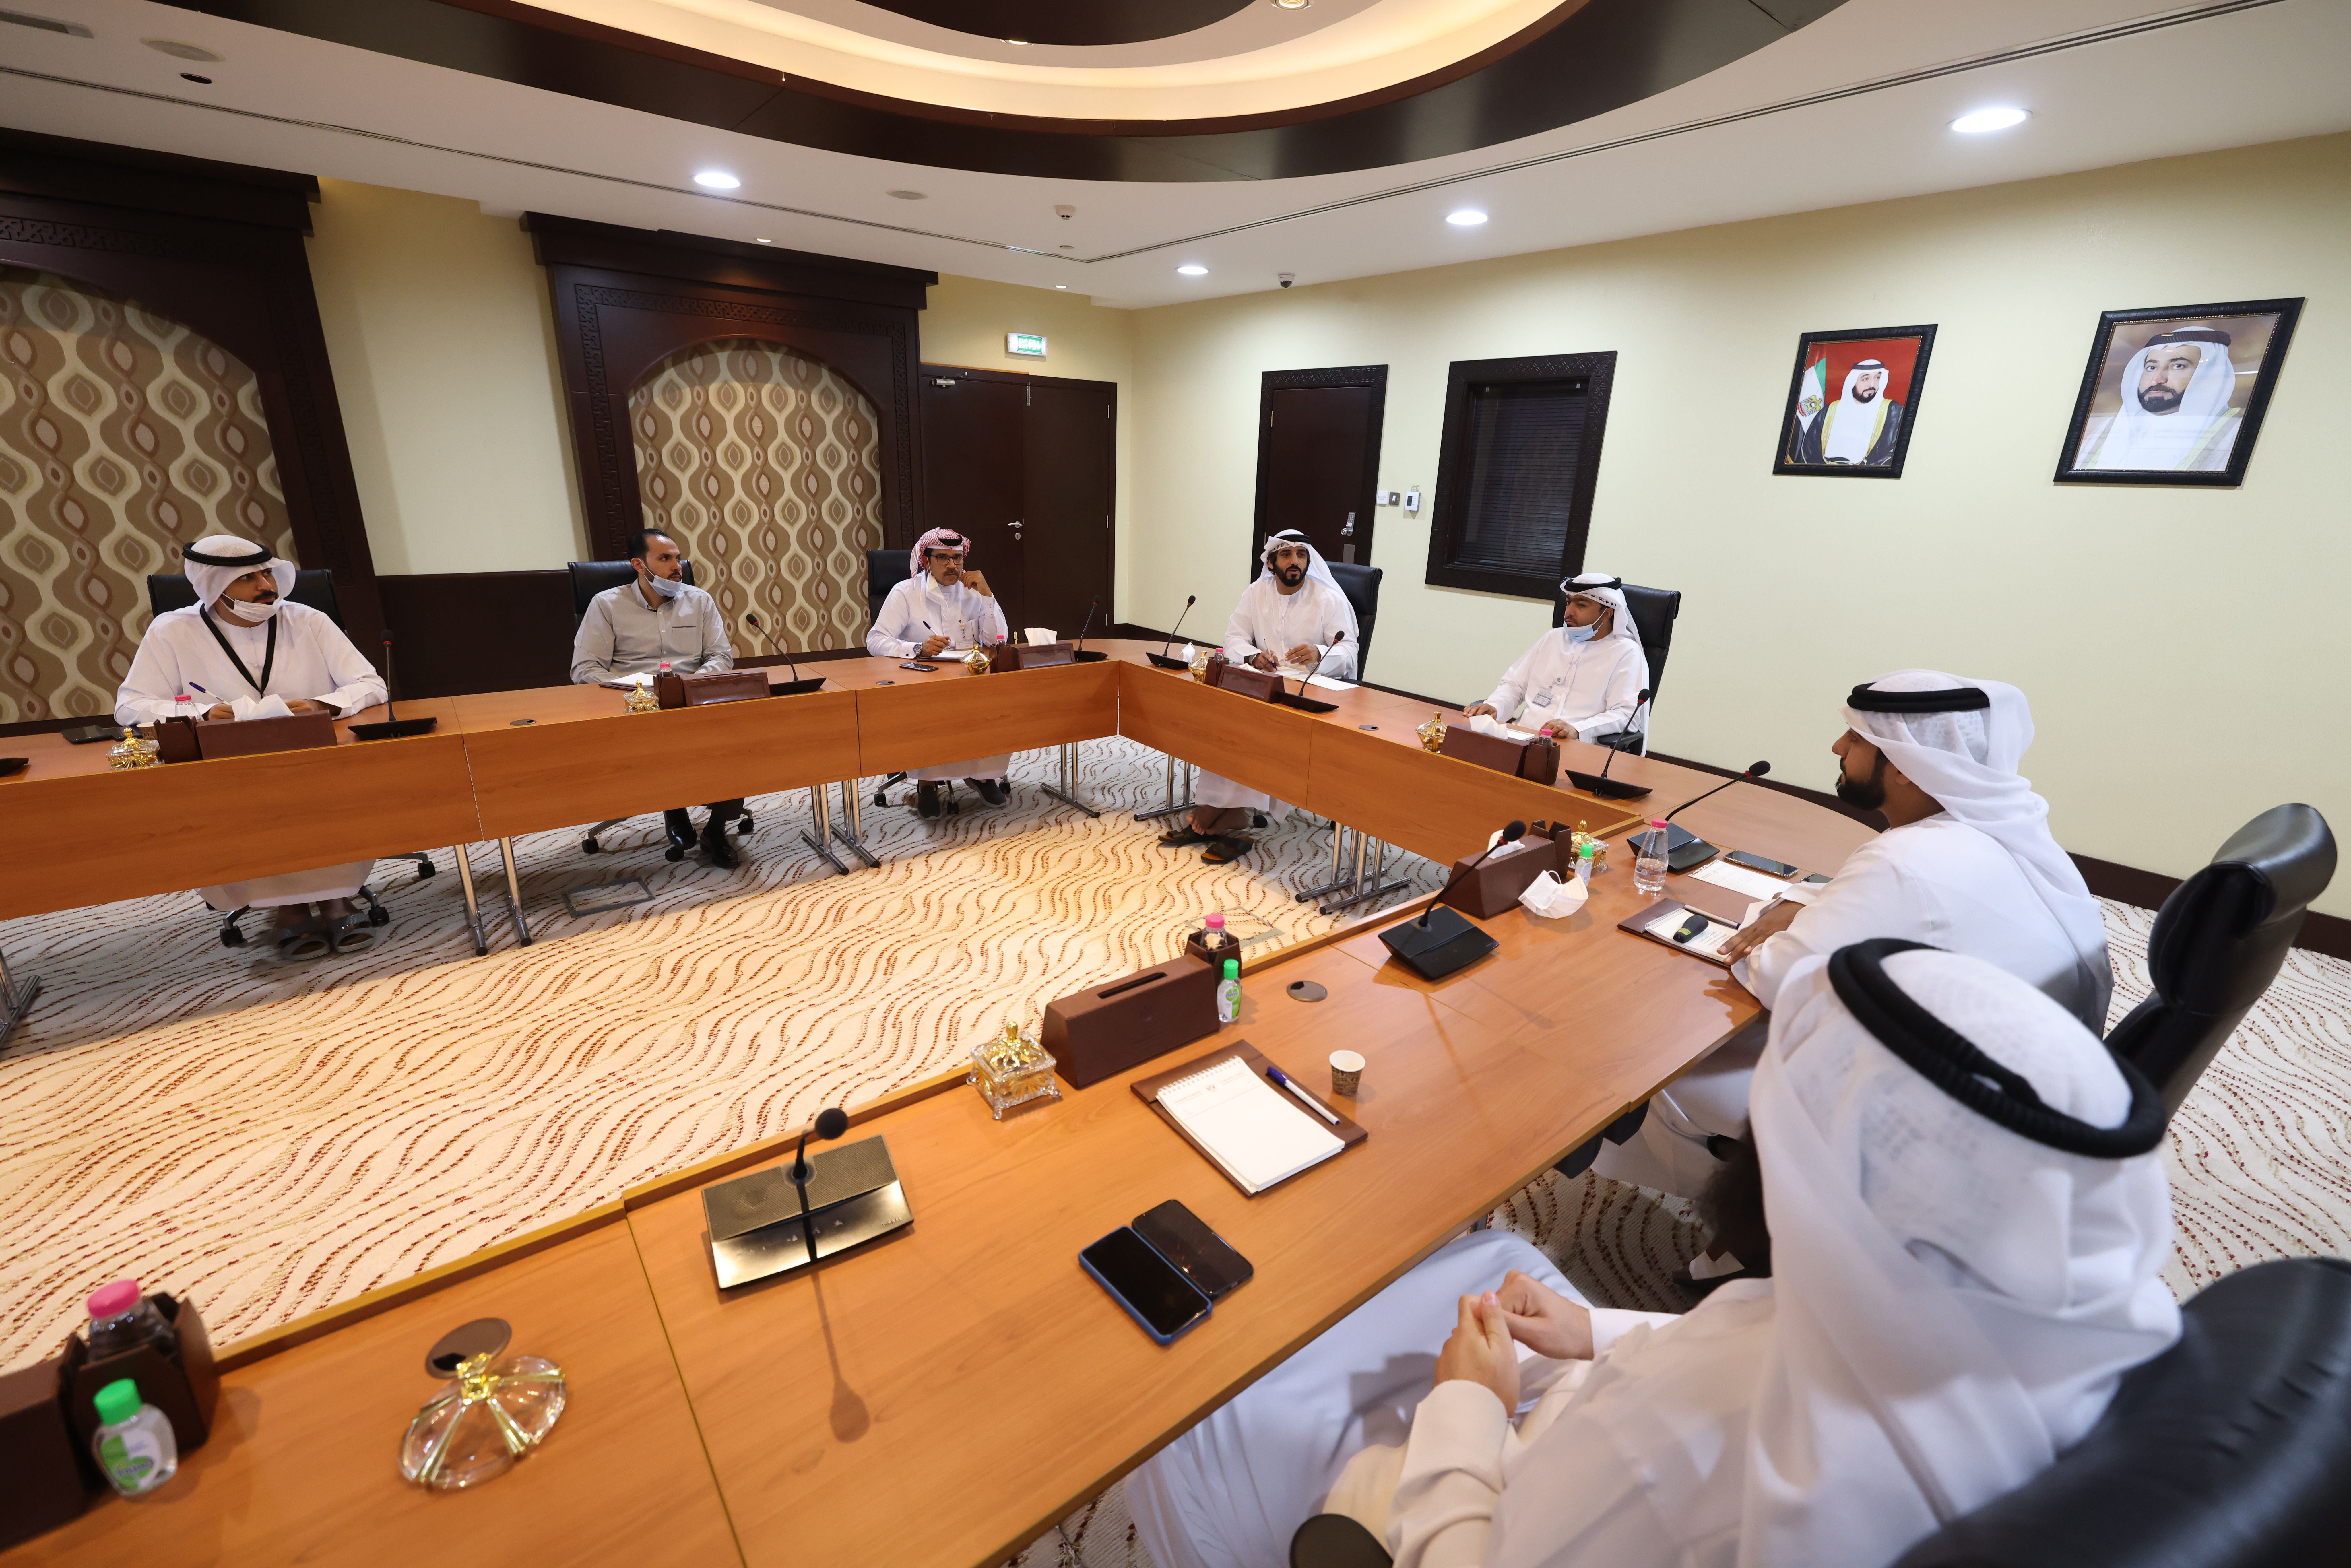 Sharjah Economic Development Department “SEDD” received a delegation from Umm Al Quwain Department of Economic Development to discuss ways of cooperation